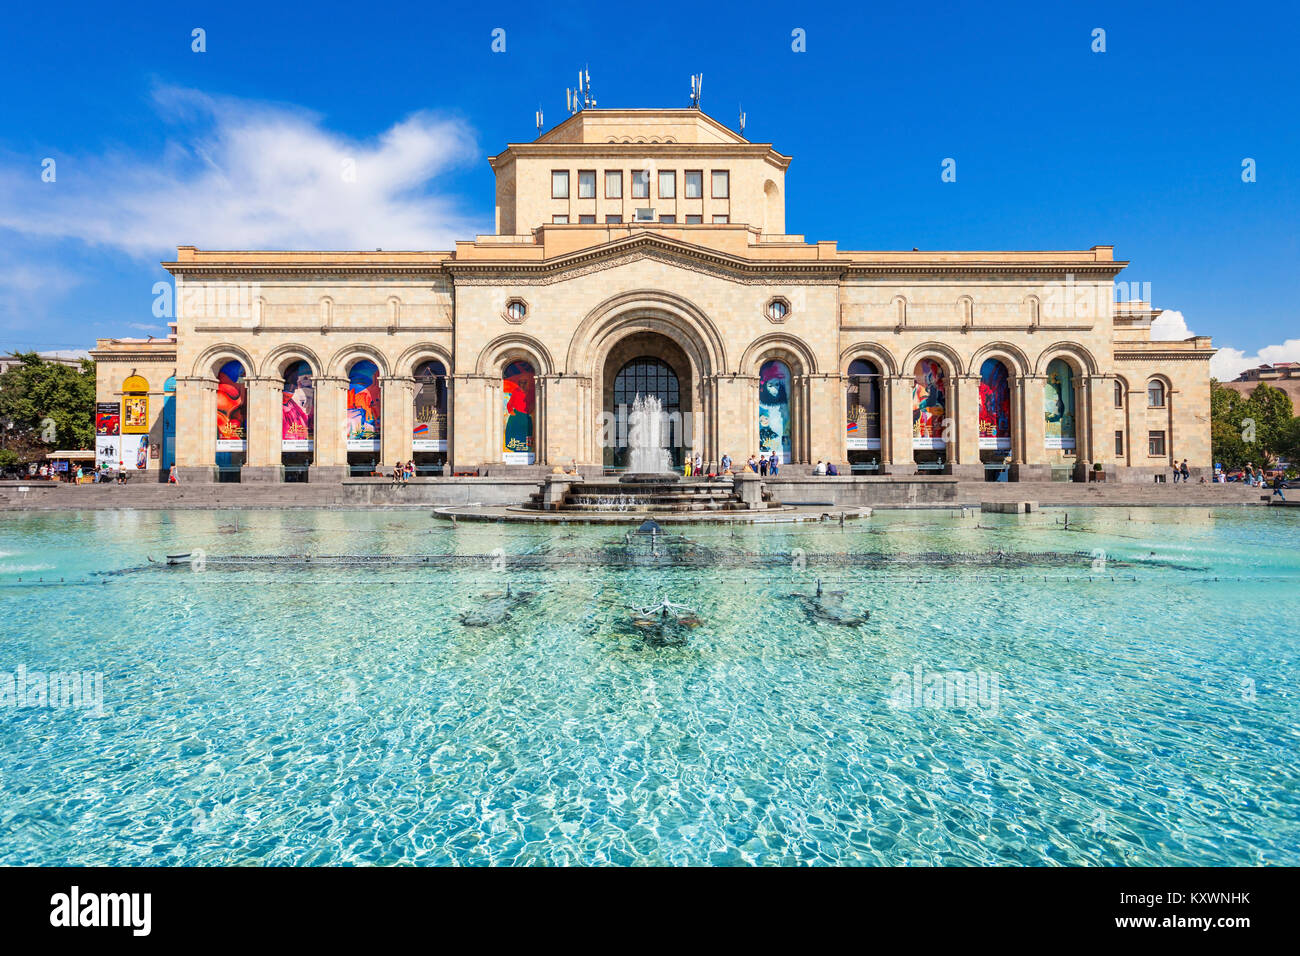 YEREVAN, ARMENIA - SEPTEMBER 28, 2015: The History Museum and the National Gallery of Armenia, located on Republic Square in Yerevan, Armenia. Stock Photo